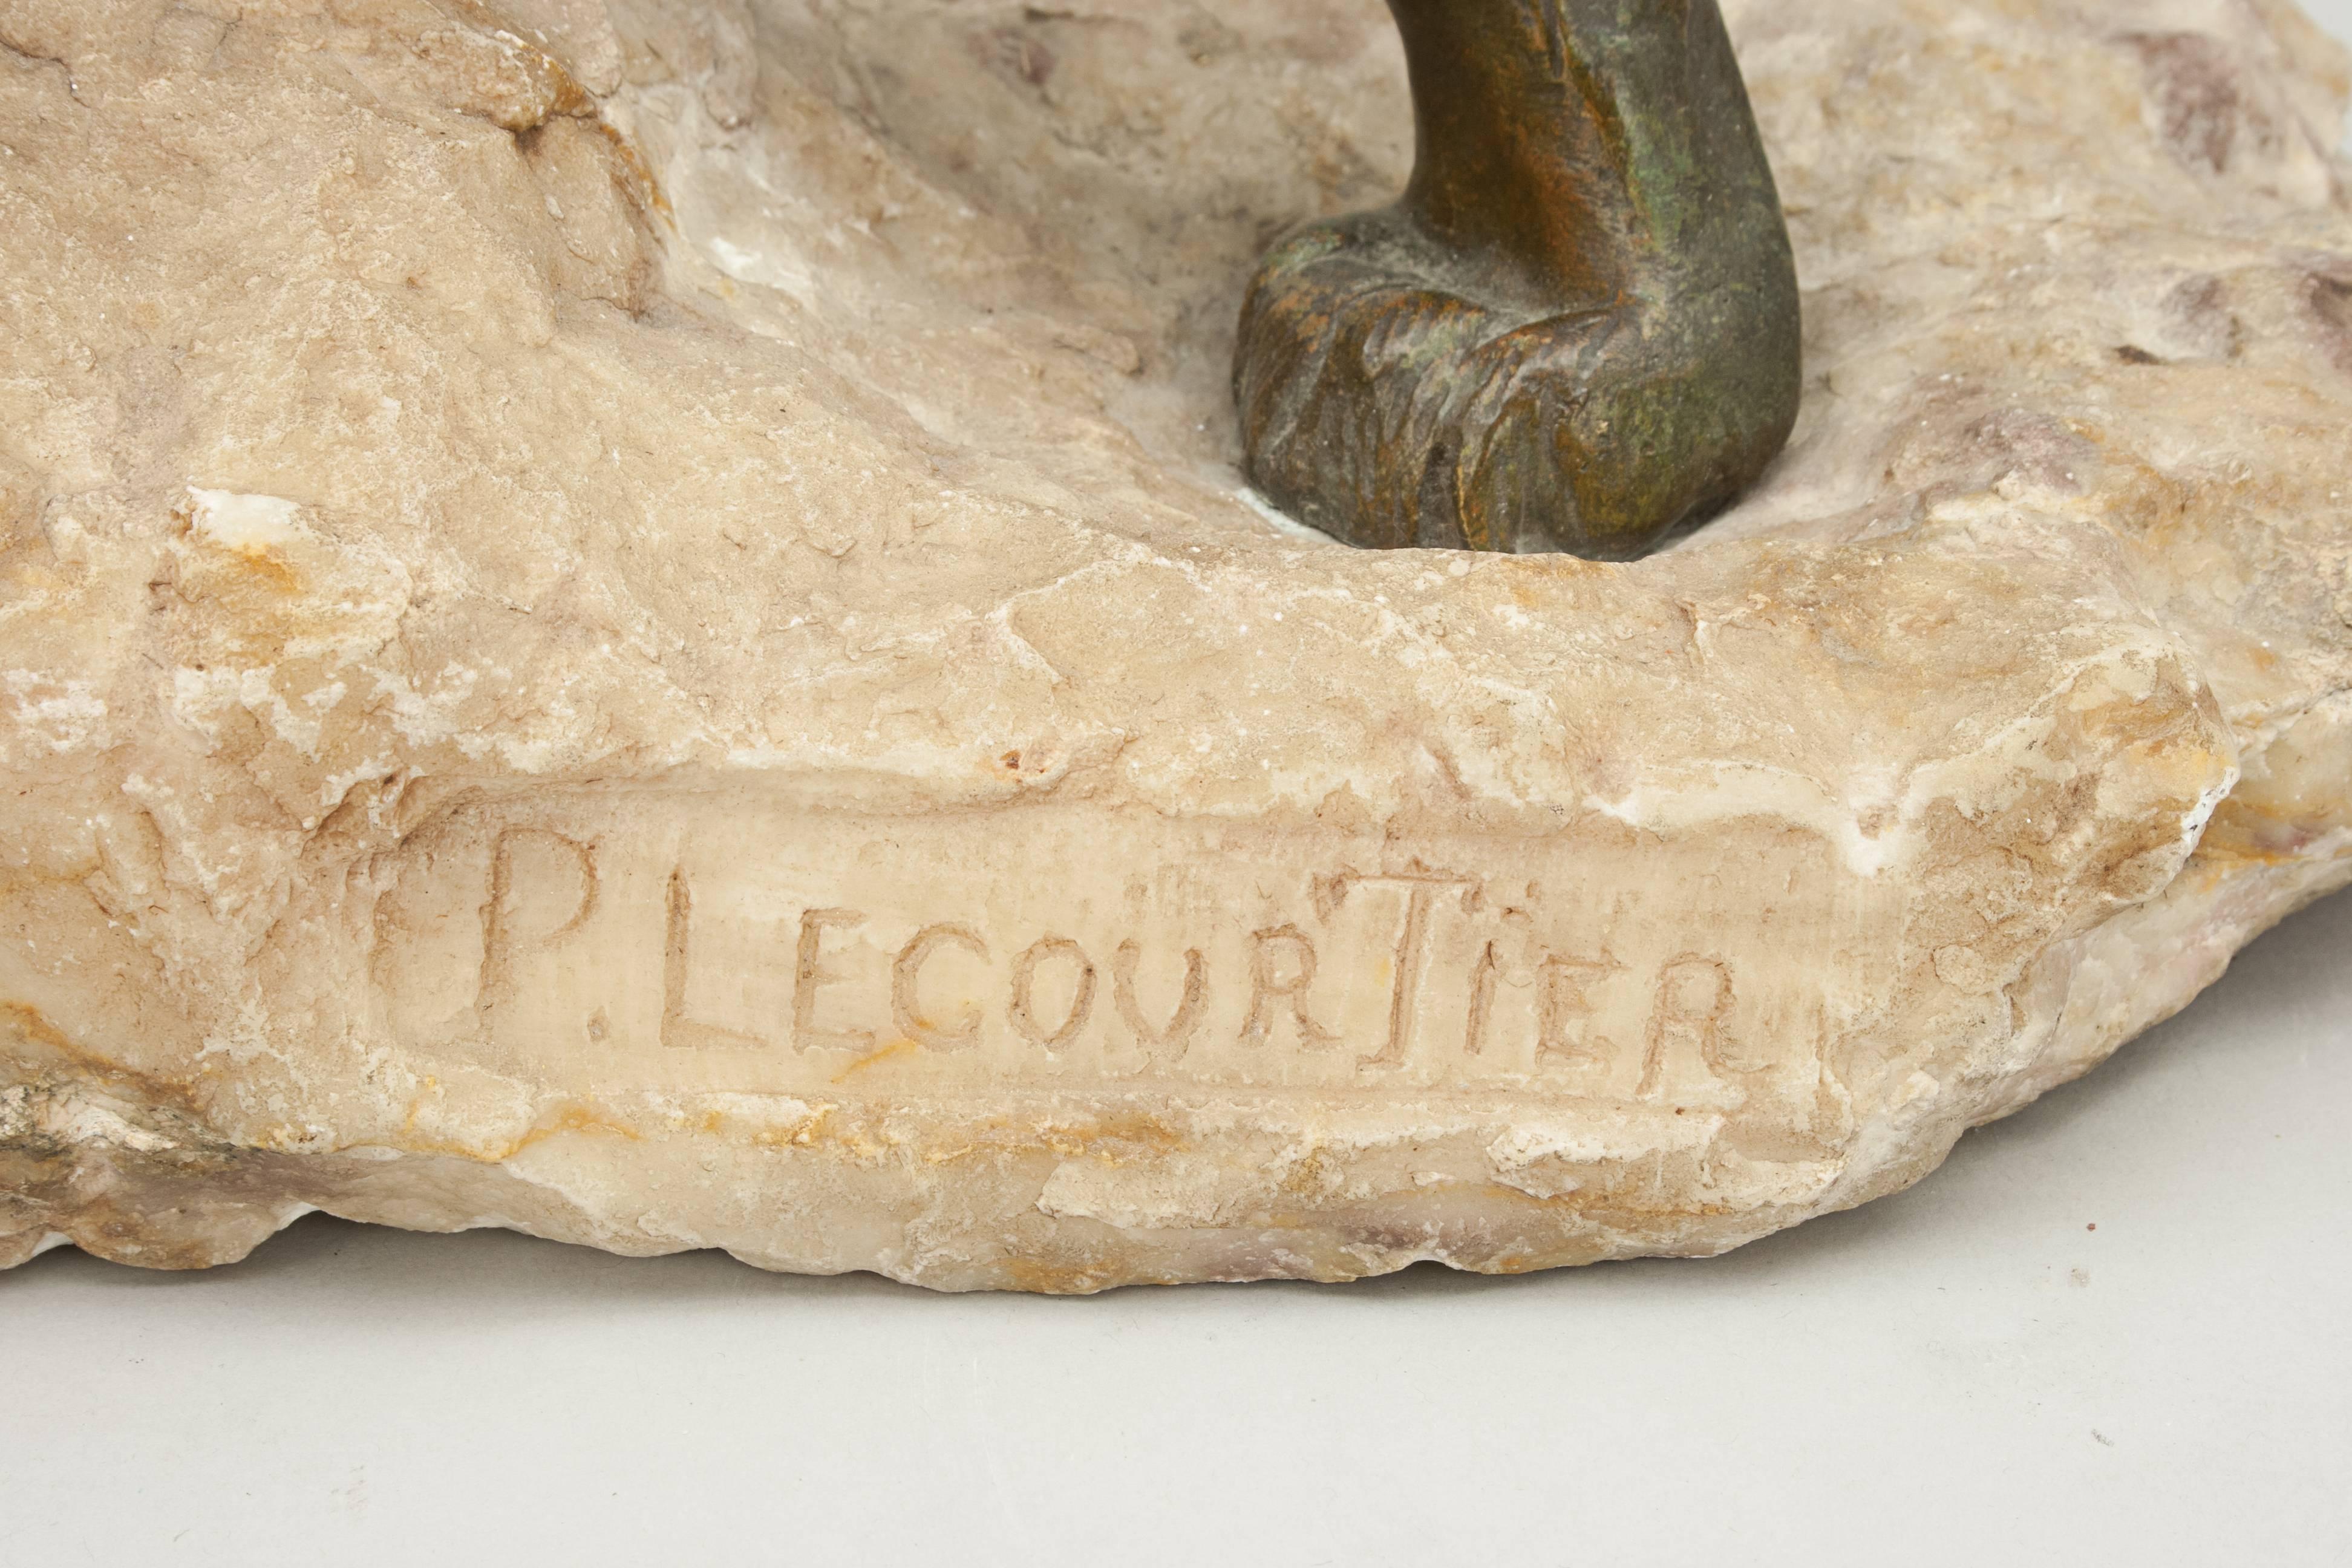 p.lecourtier bronze